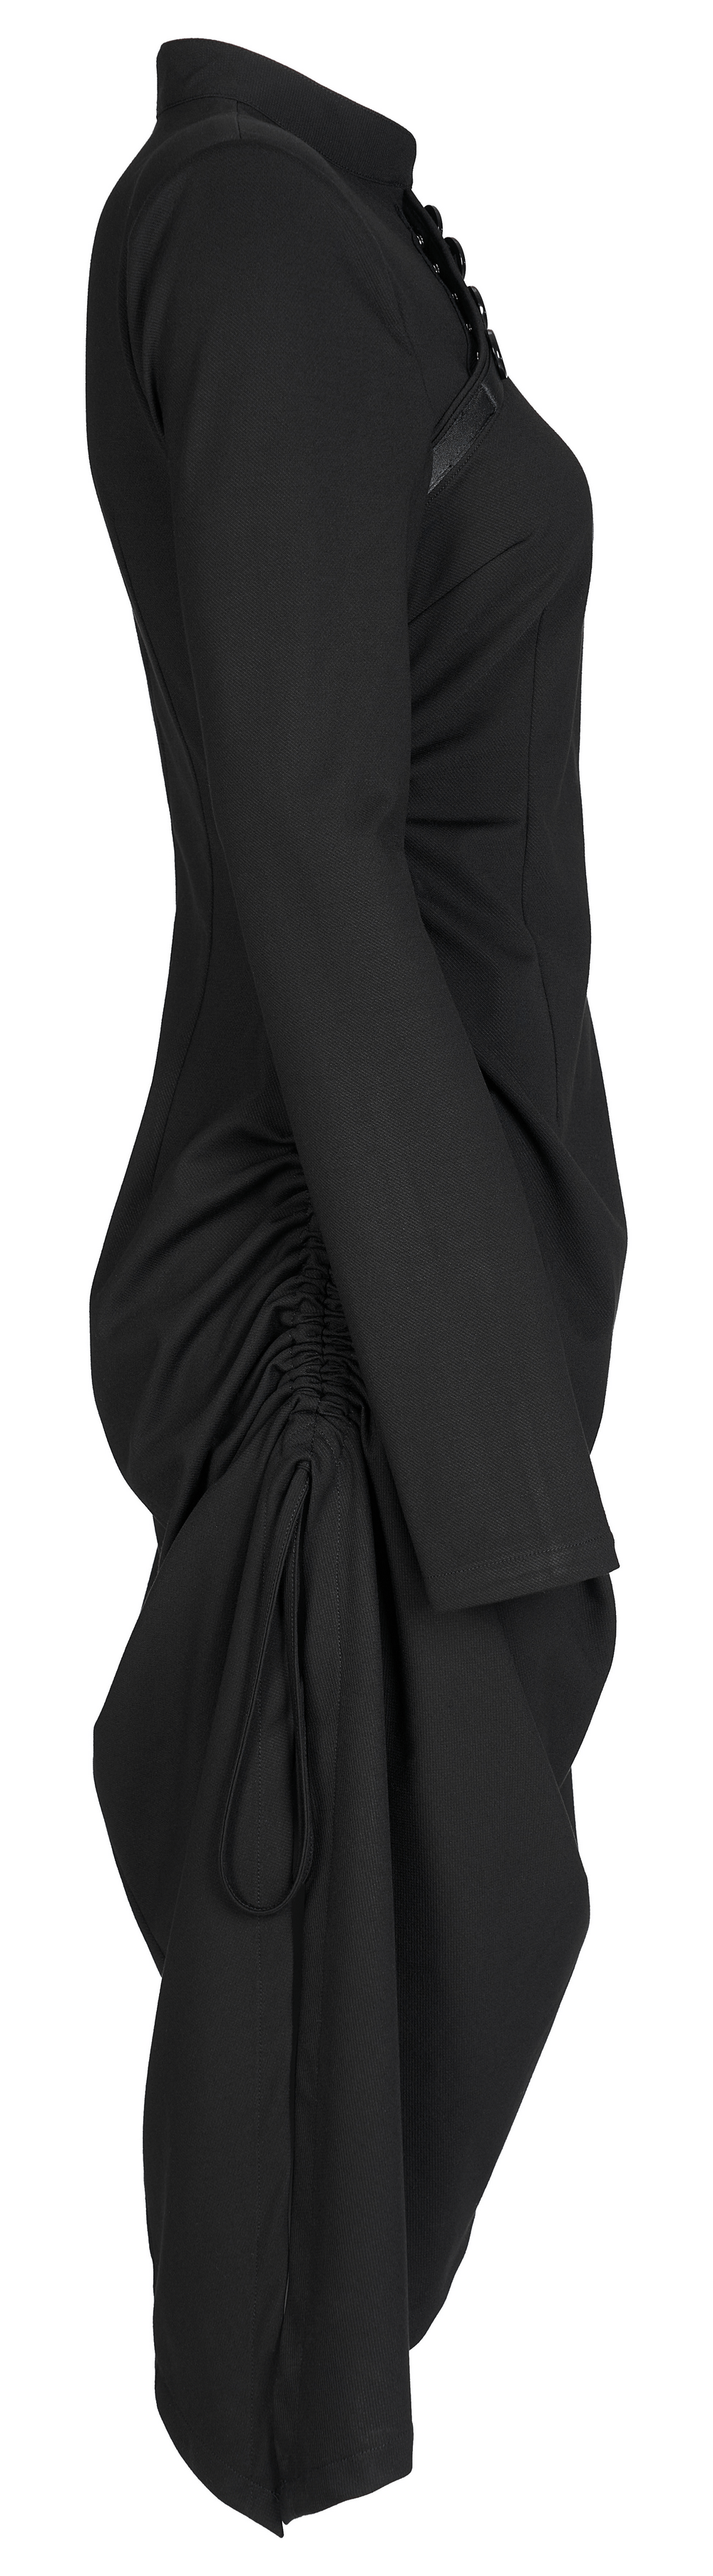 Modern Asymmetric Black Midi Dress with Buckles